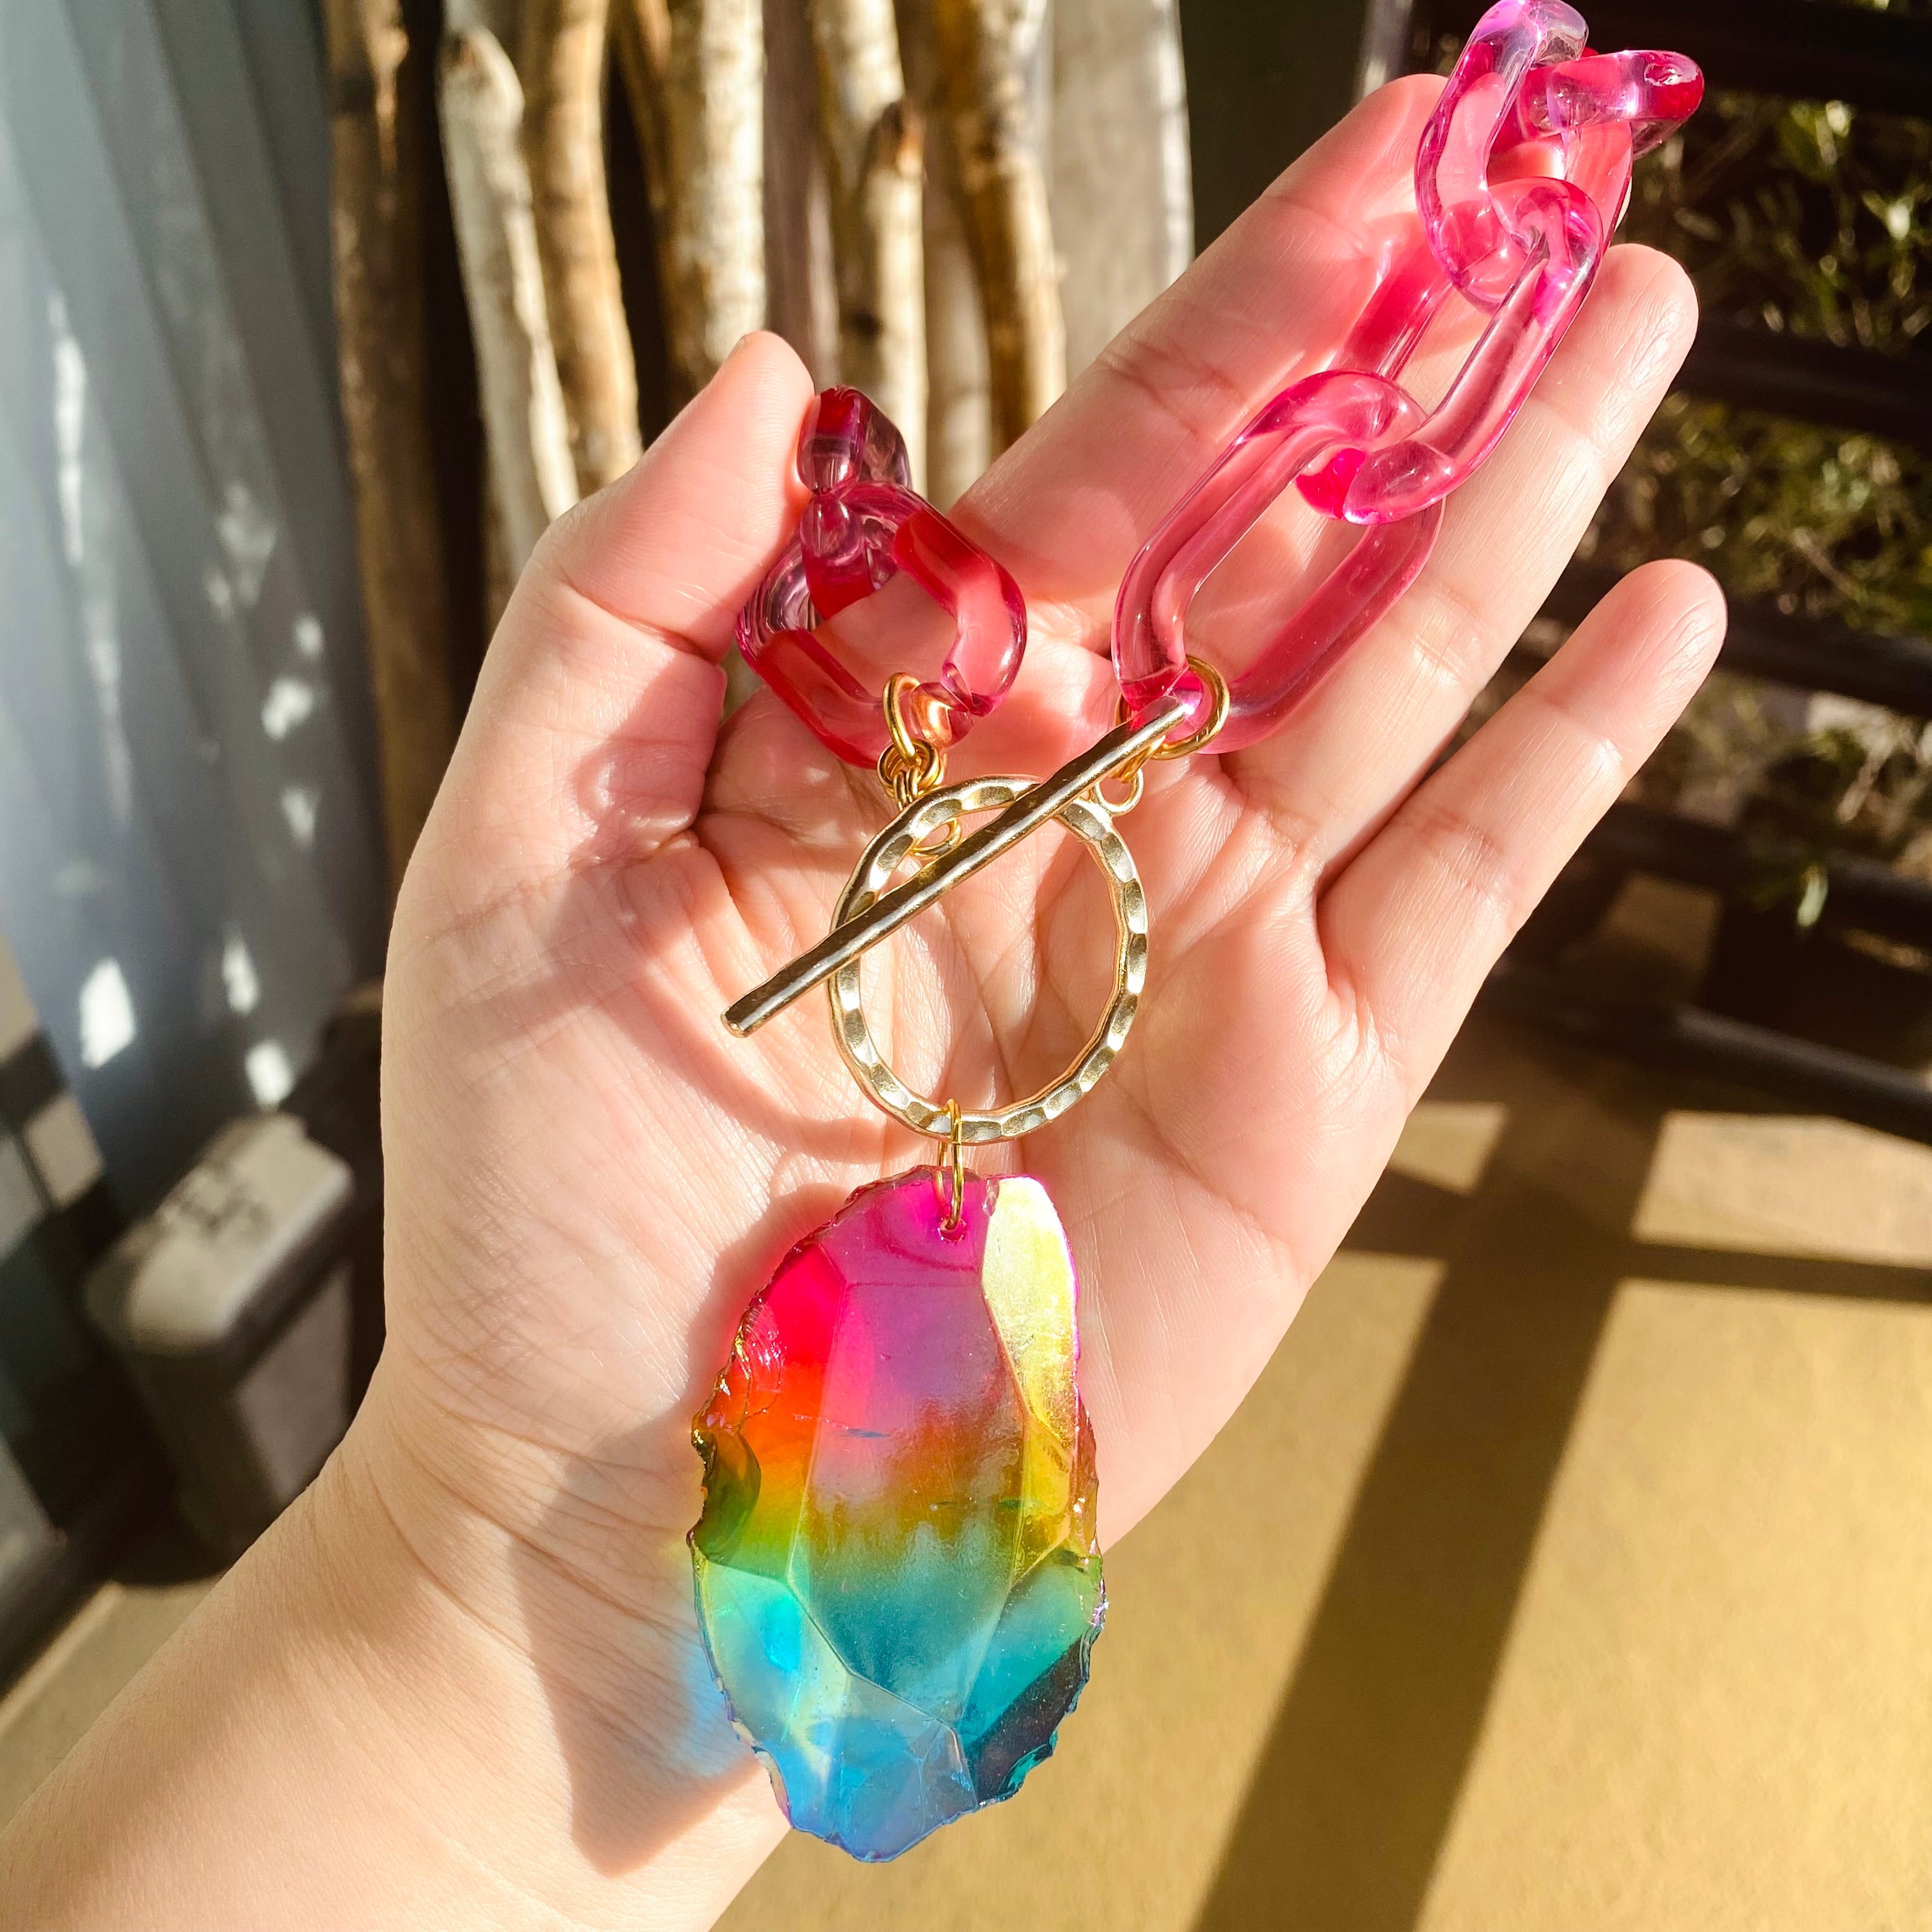 Rainbow agate pendant necklace